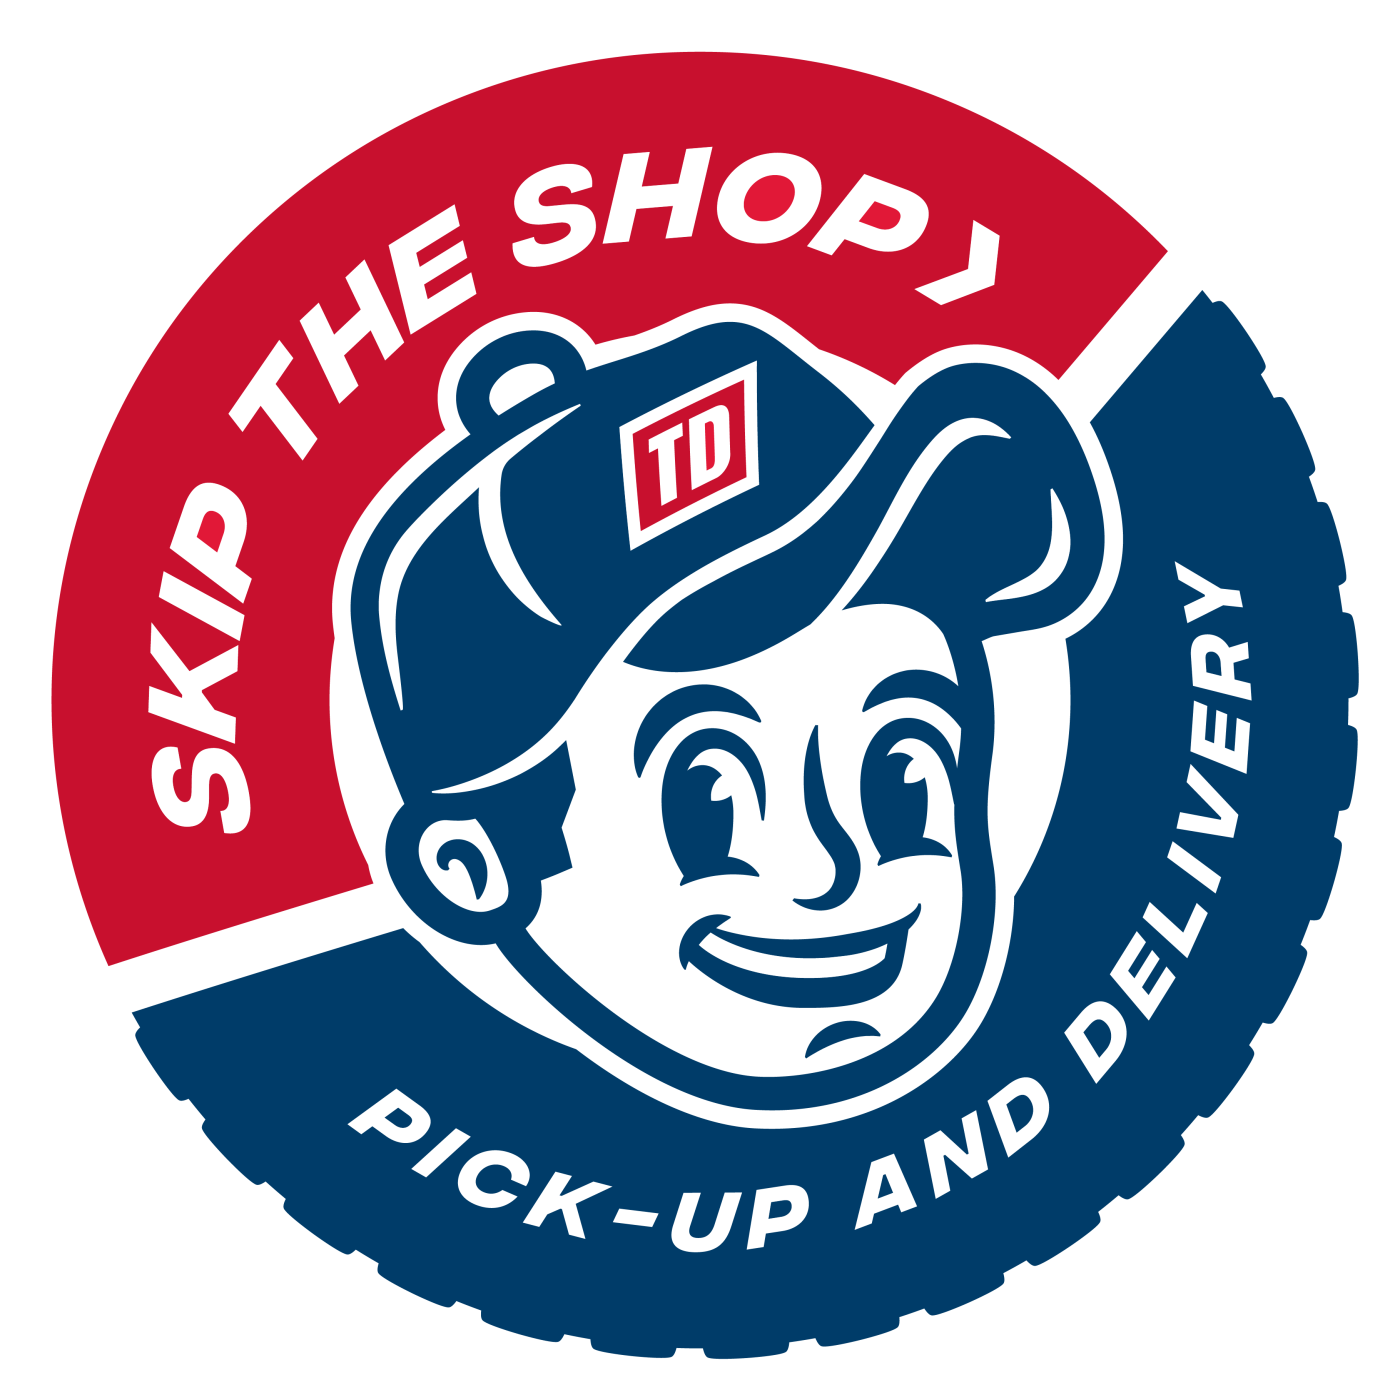 Skip the Shop badge